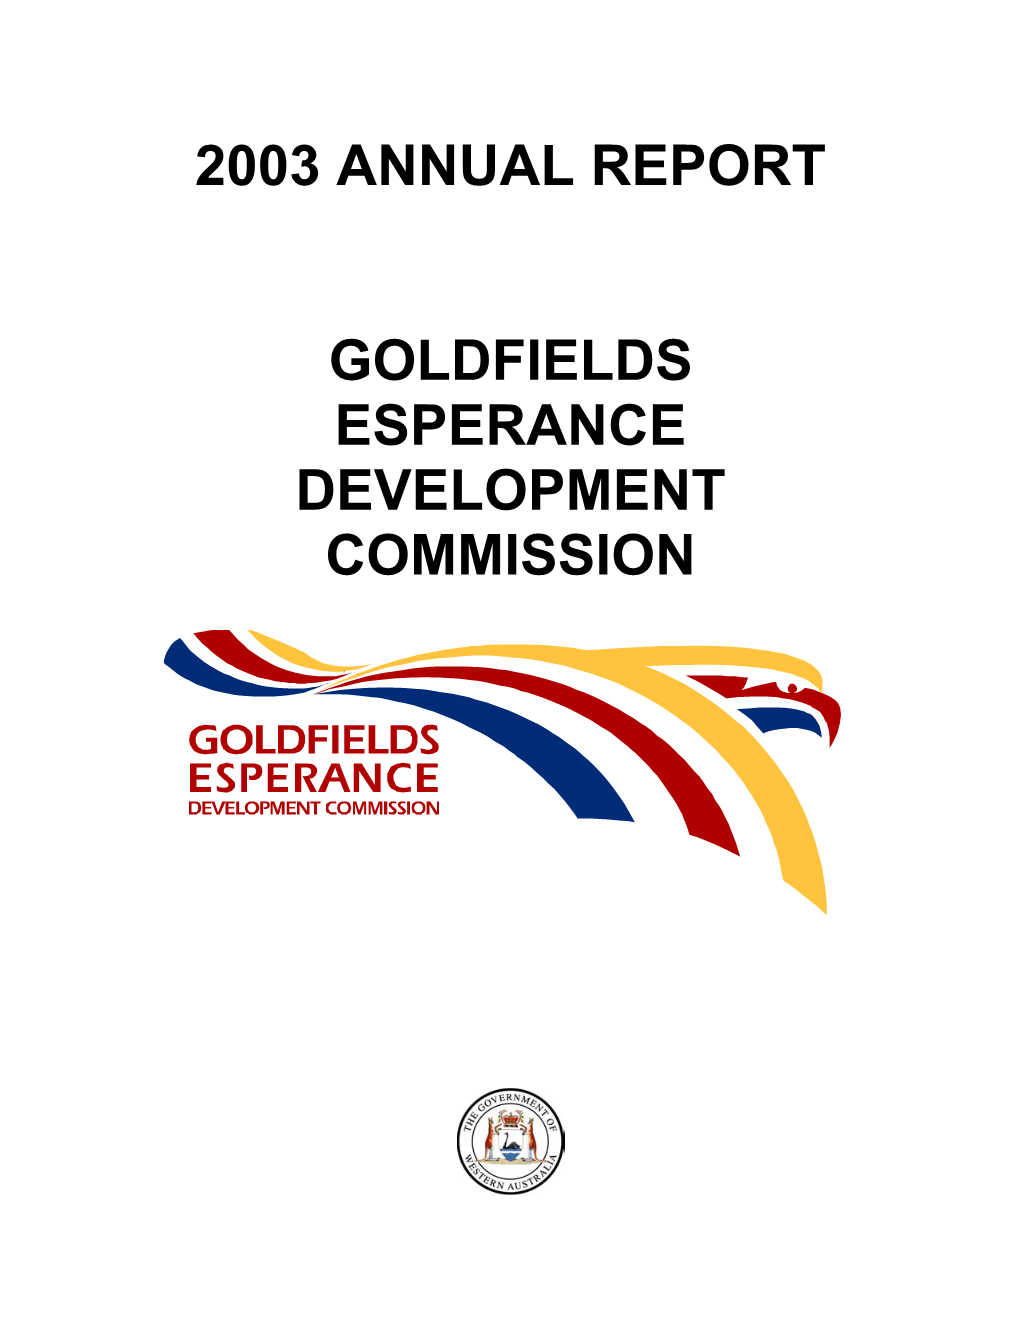 2003 Annual Report Goldfields Esperance